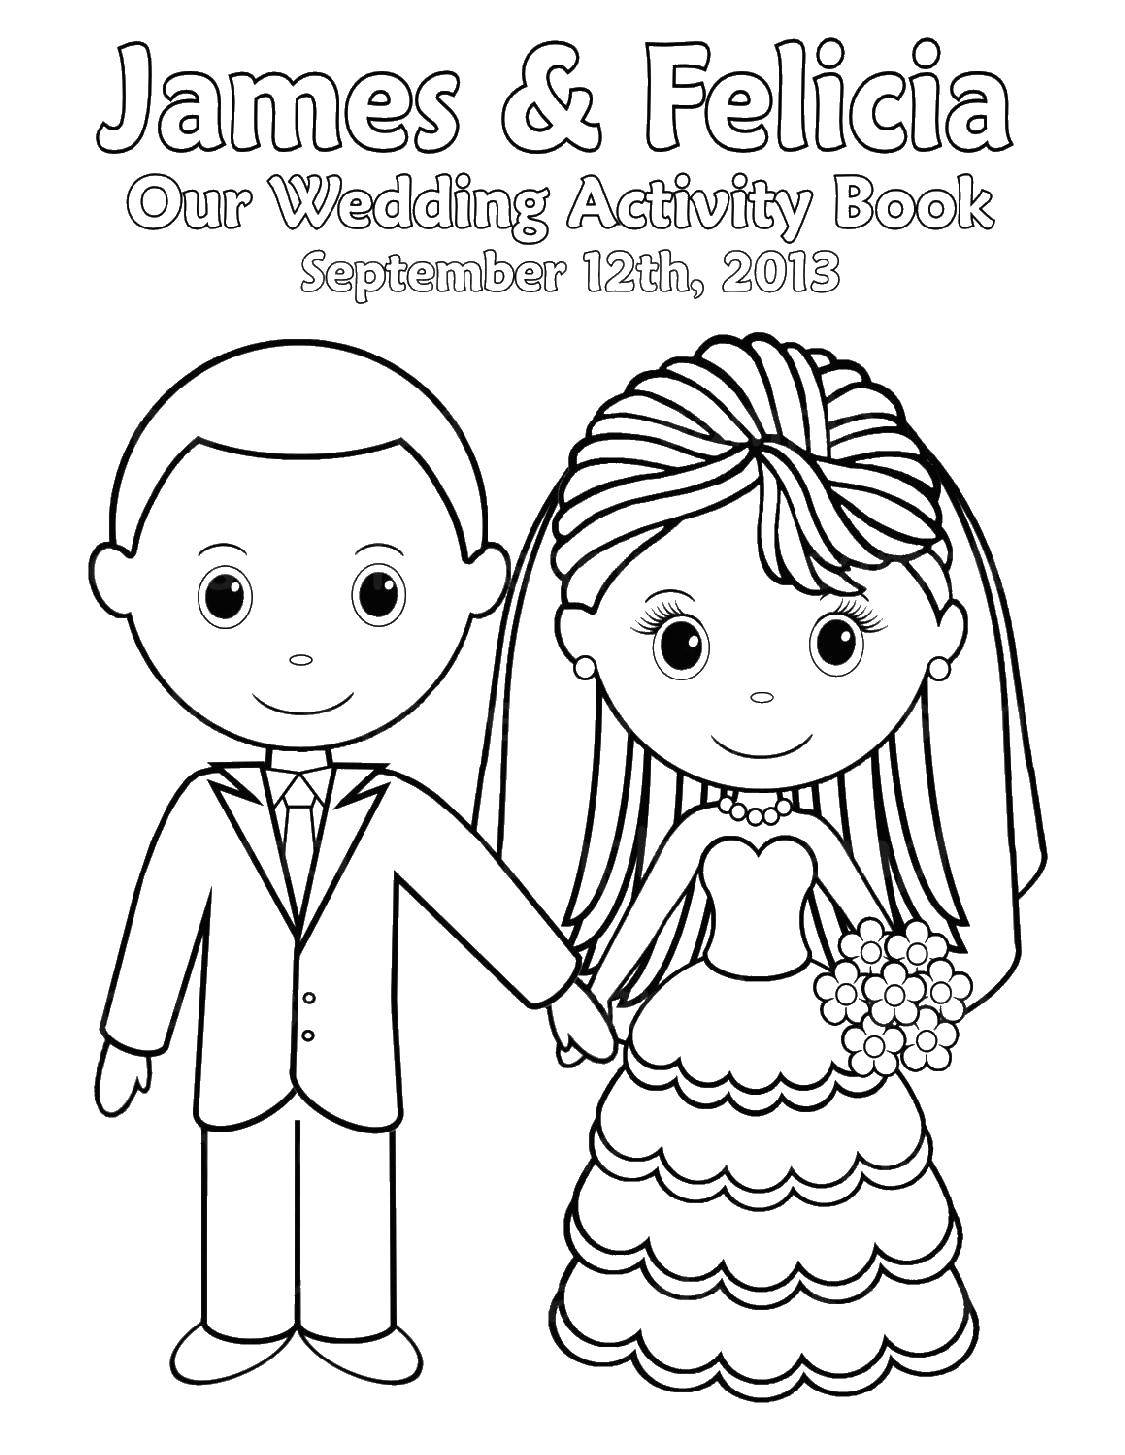 Coloring James and Felicia. Category Wedding. Tags:  wedding, bride, groom.